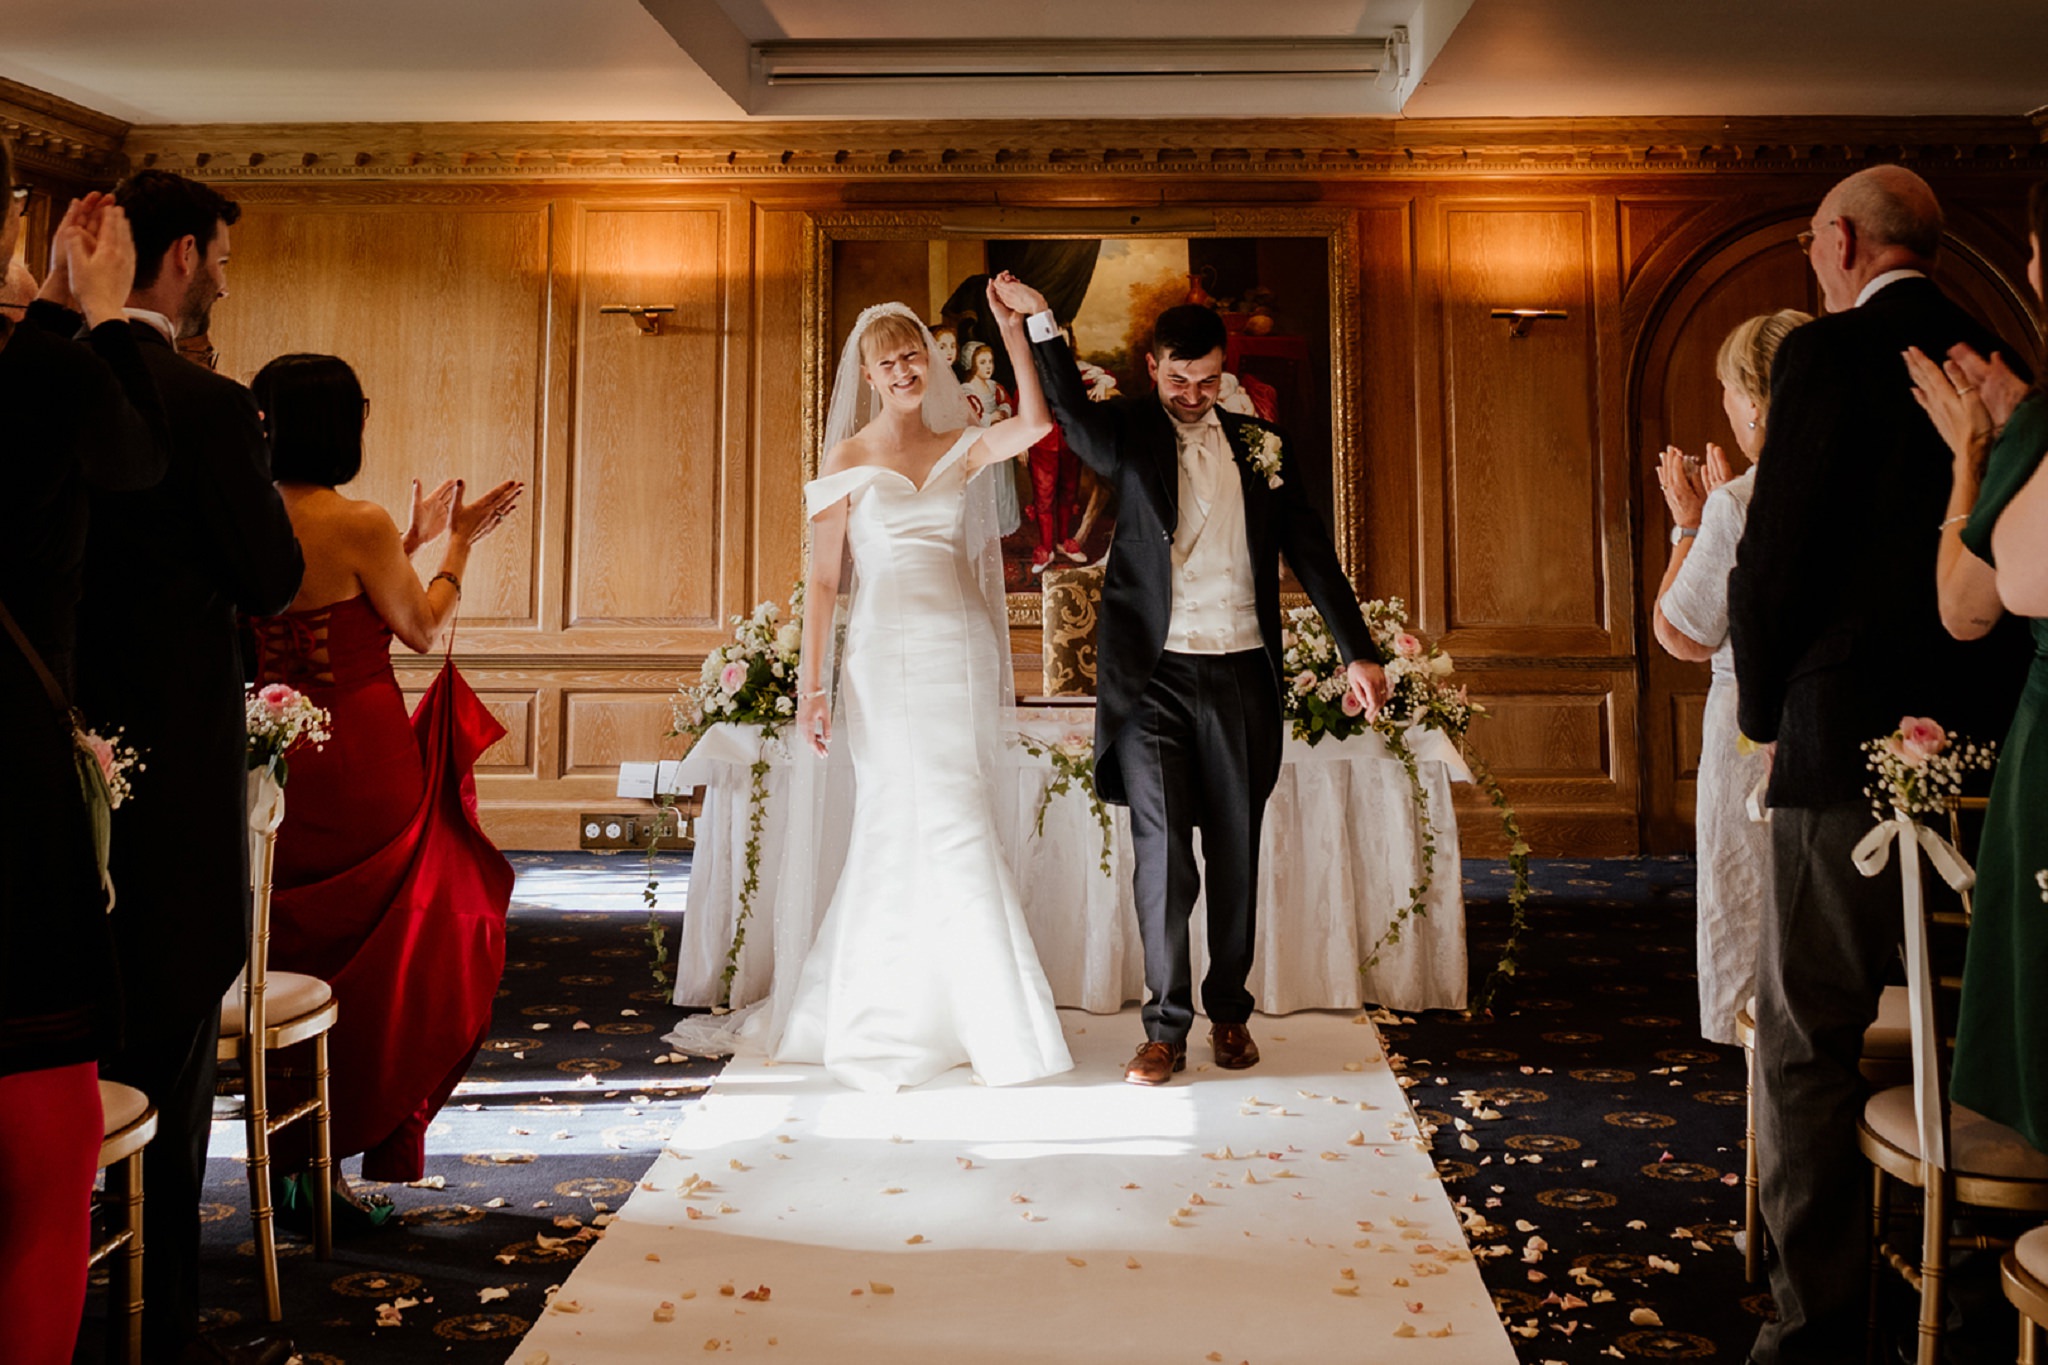 Just married - at Brocket Hall Wedding